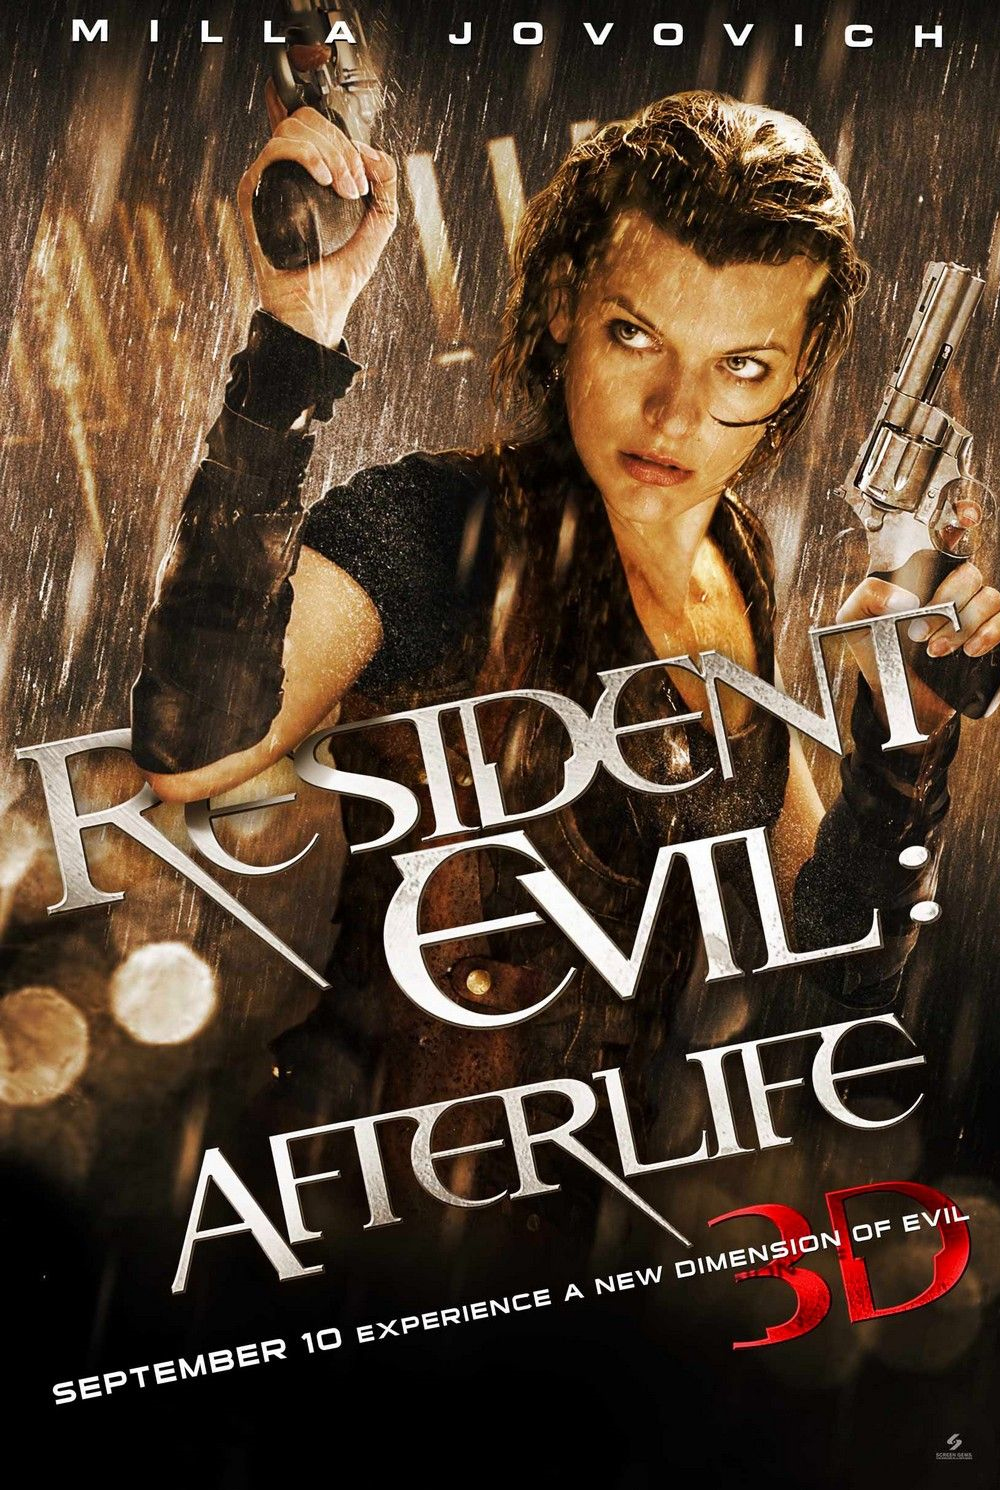 http://cinematichorrorarchive.files.wordpress.com/2010/09/resident-evil-afterlife-poster.jpg